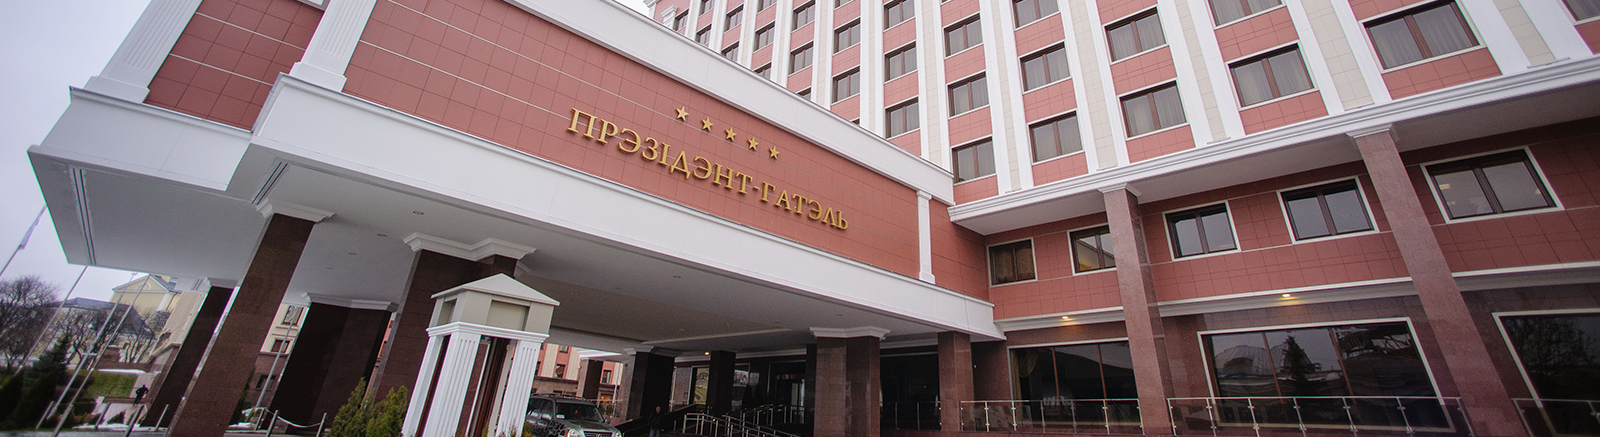 President Hotel, Minsk - Emsa naat